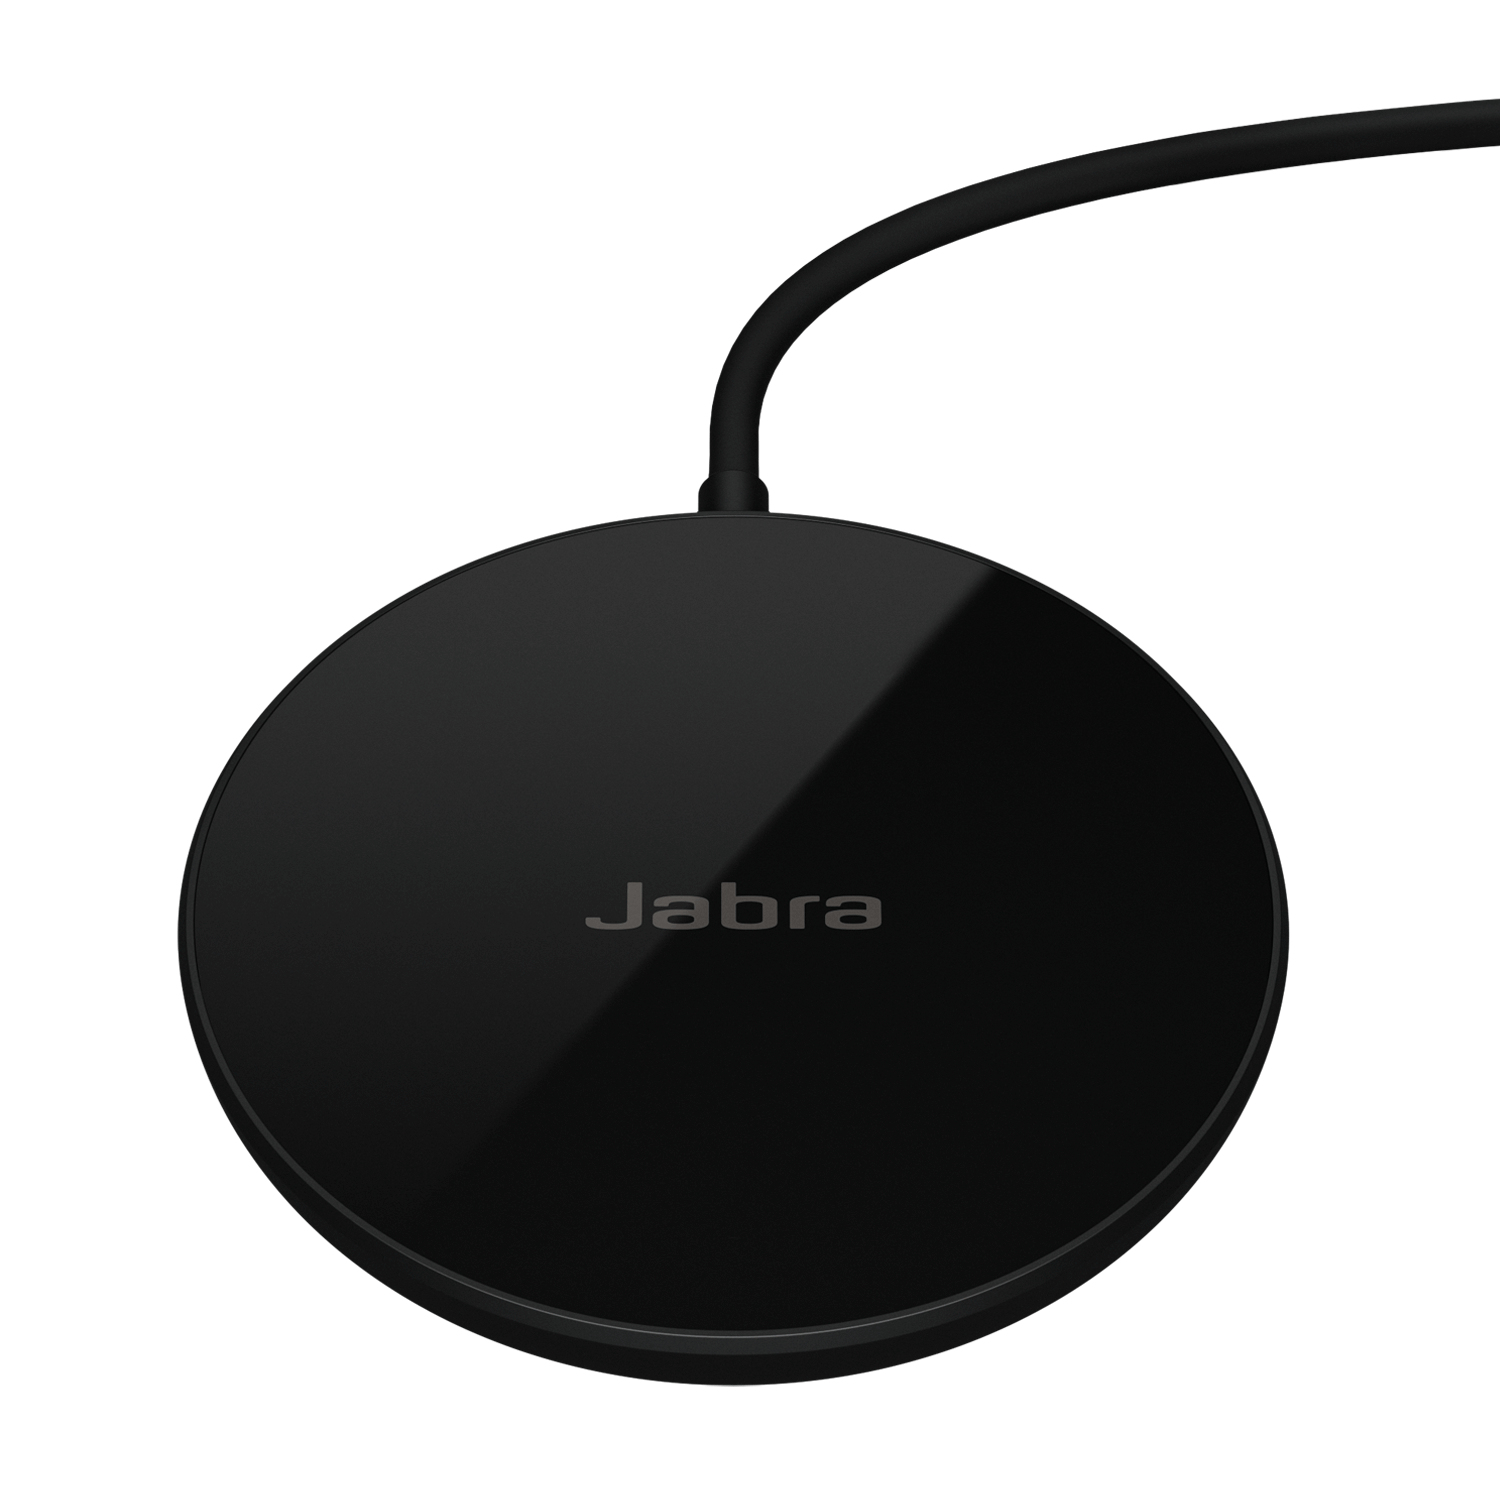 Jabra 14207-92 mobilladdare Headset Svart USB Trådlös laddning inomhus